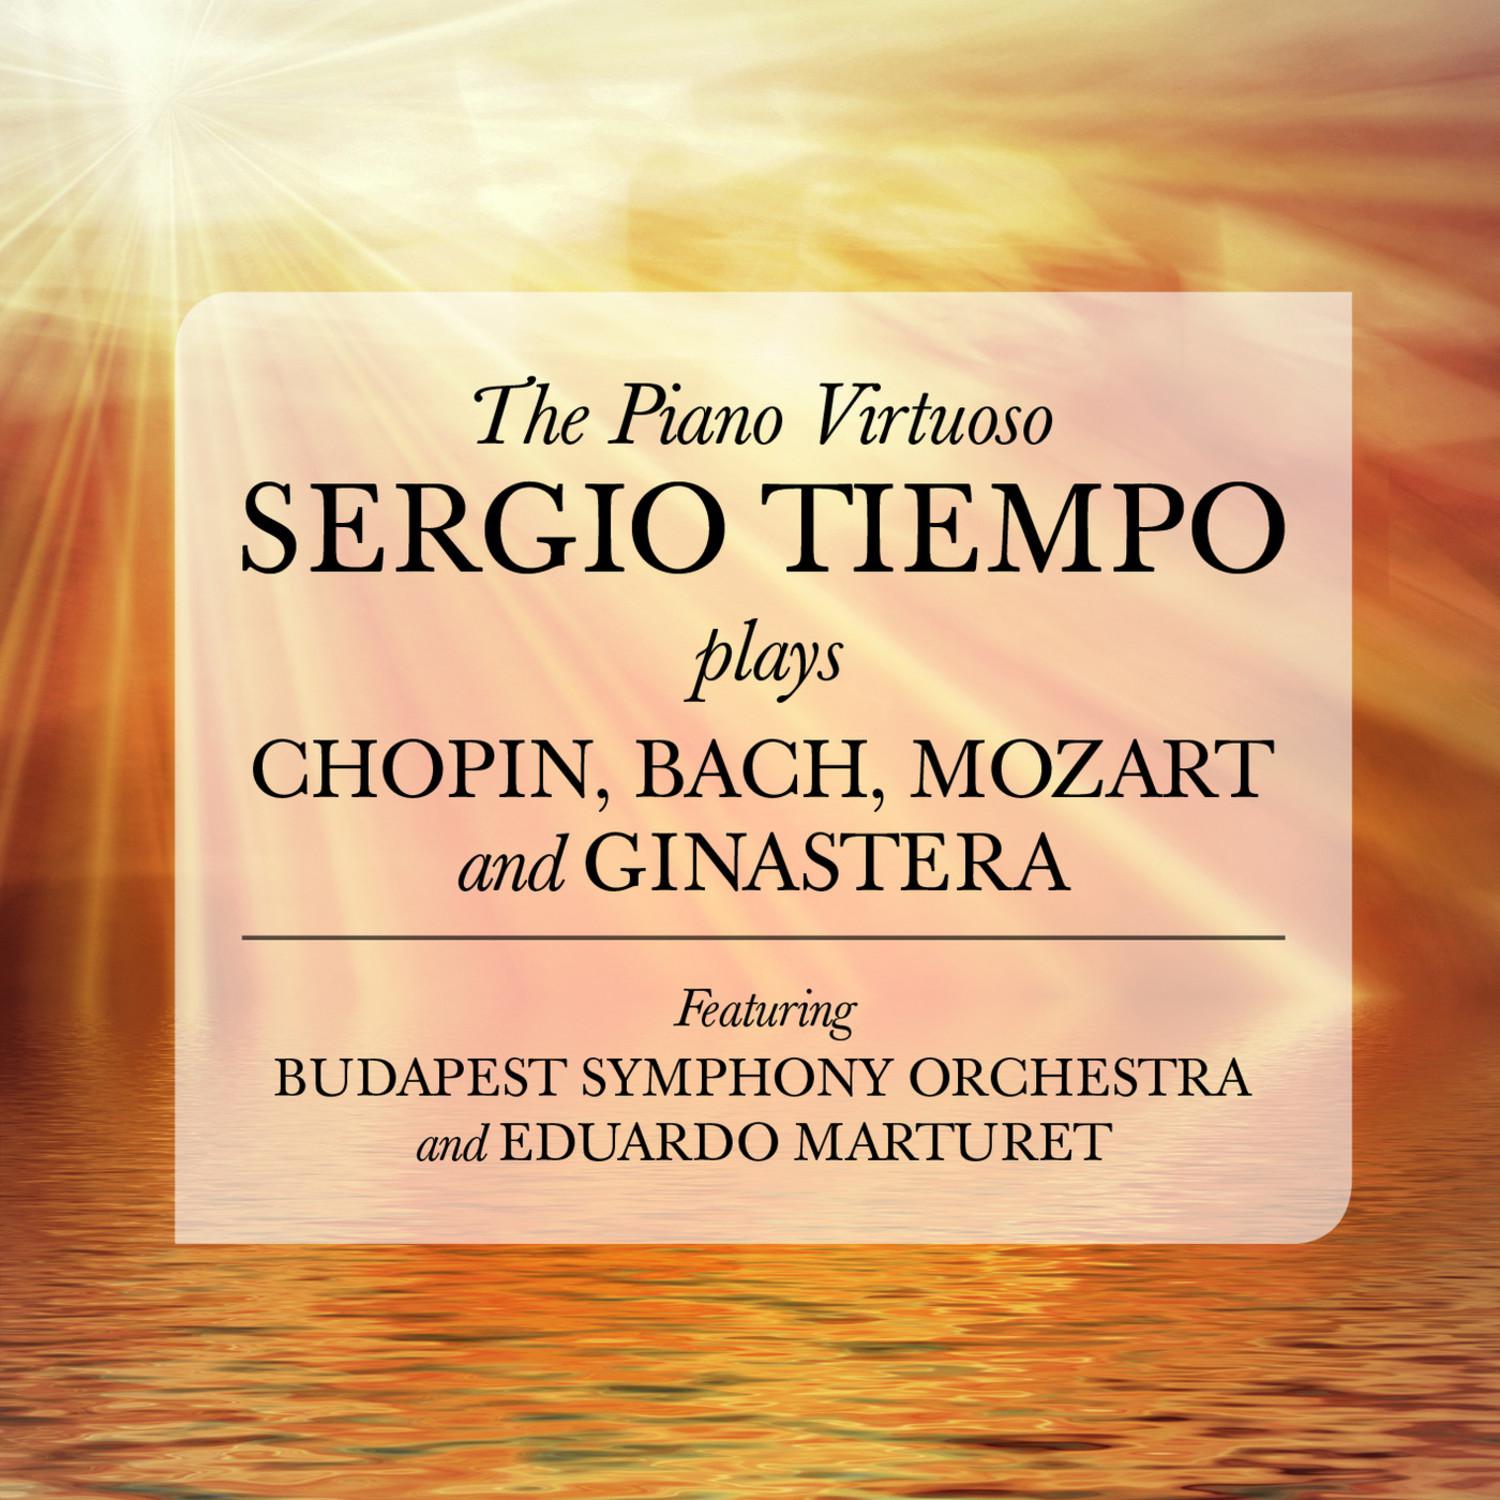 Concerto No. 1 in E Minor for Piano and Orchestra, Op. 11: III. Rondo vivace